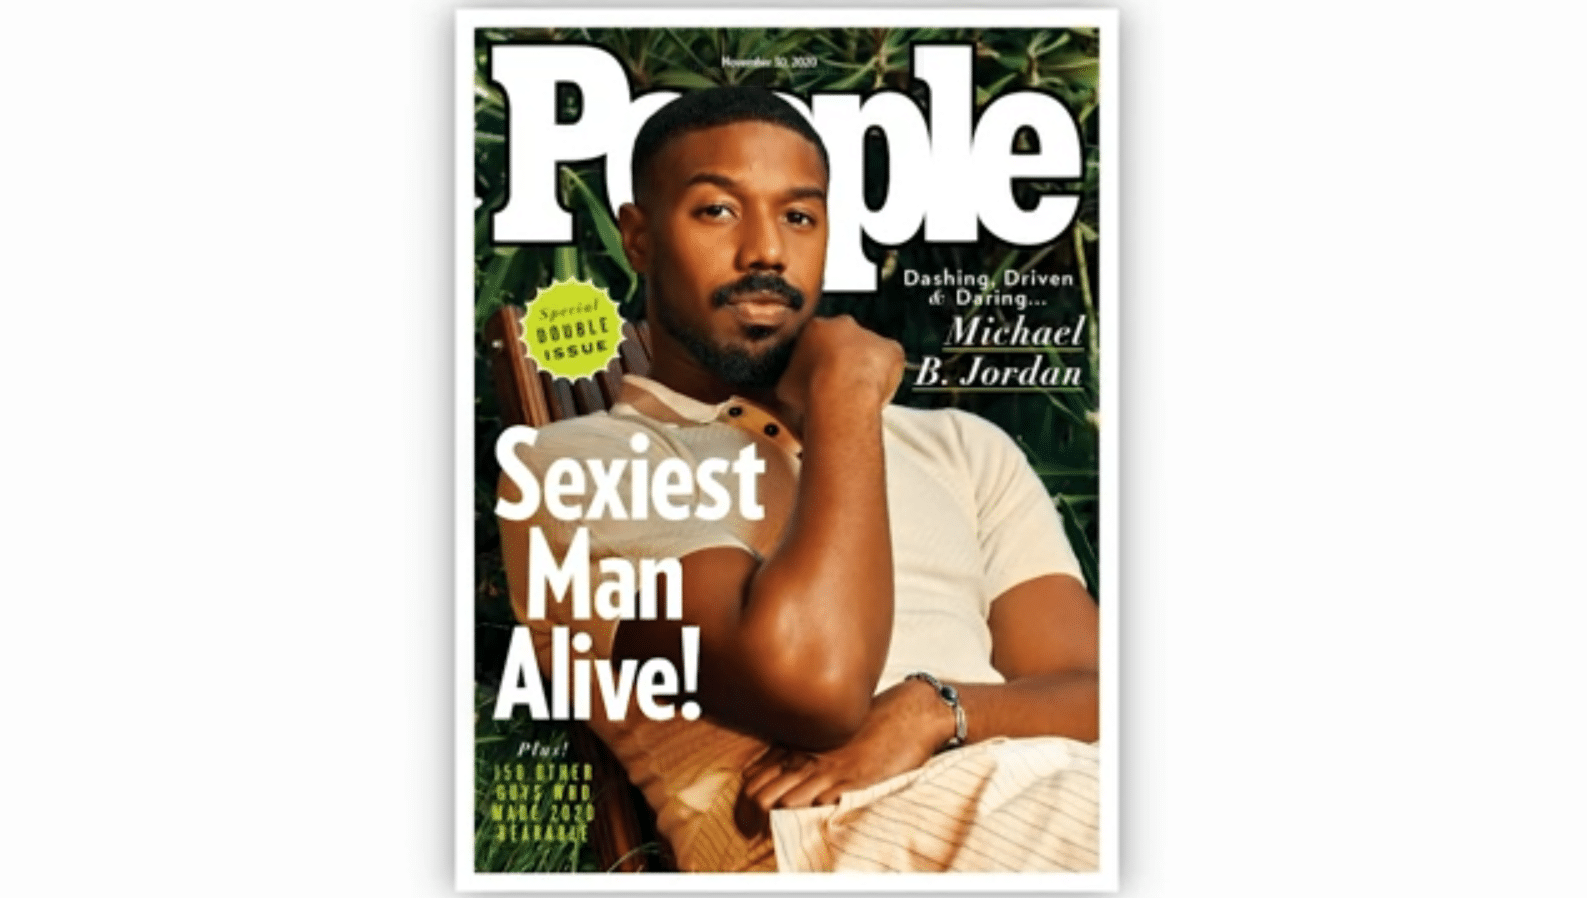 Michael B. Jordan is People magazine's Sexiest Man Alive 